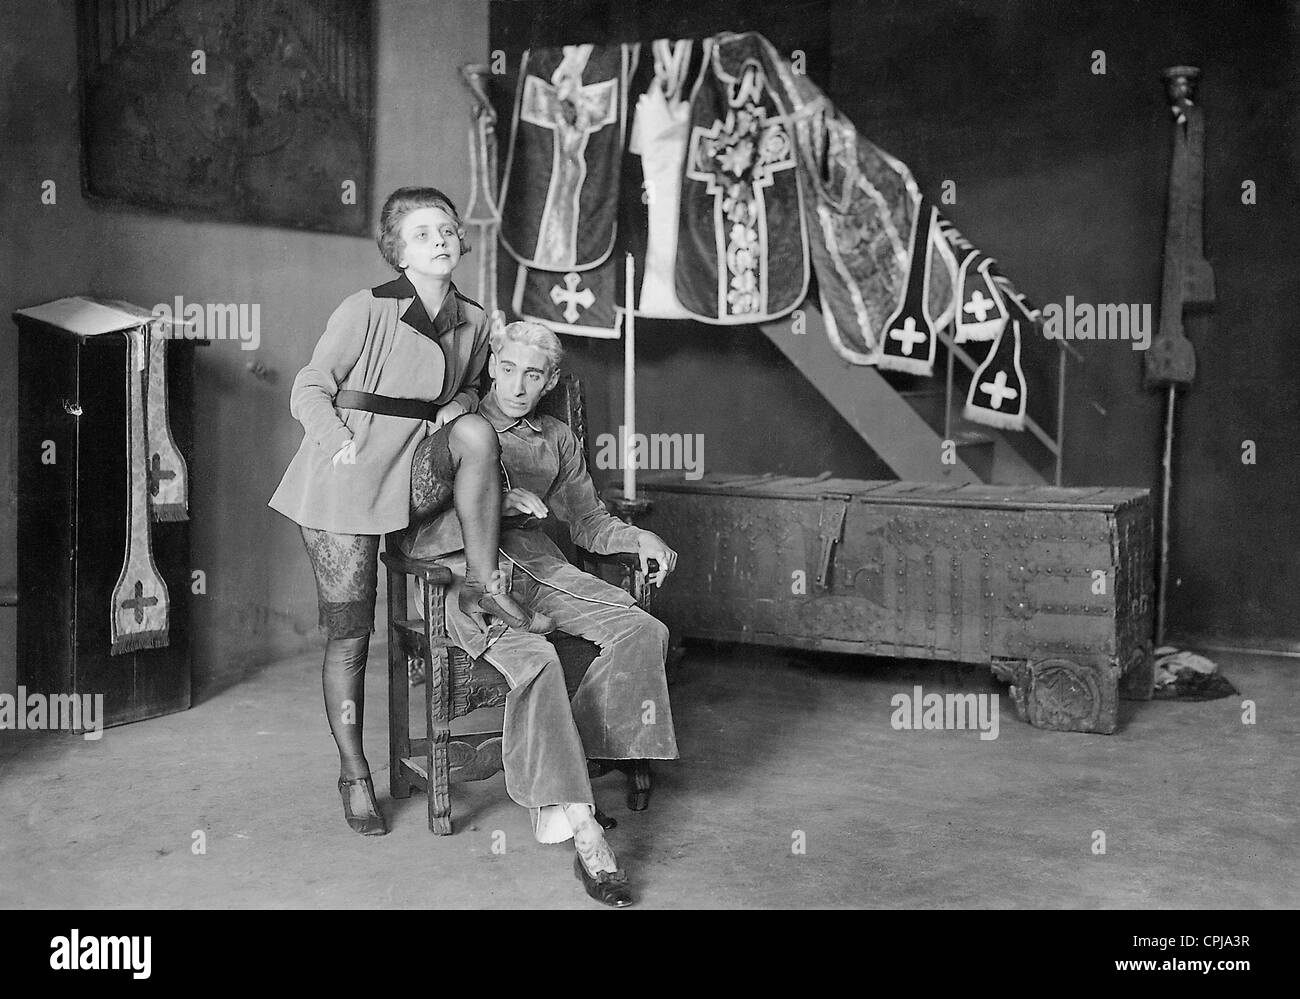 Szene aus Wedekindss "Angst um nichts", 1919 Stockfoto